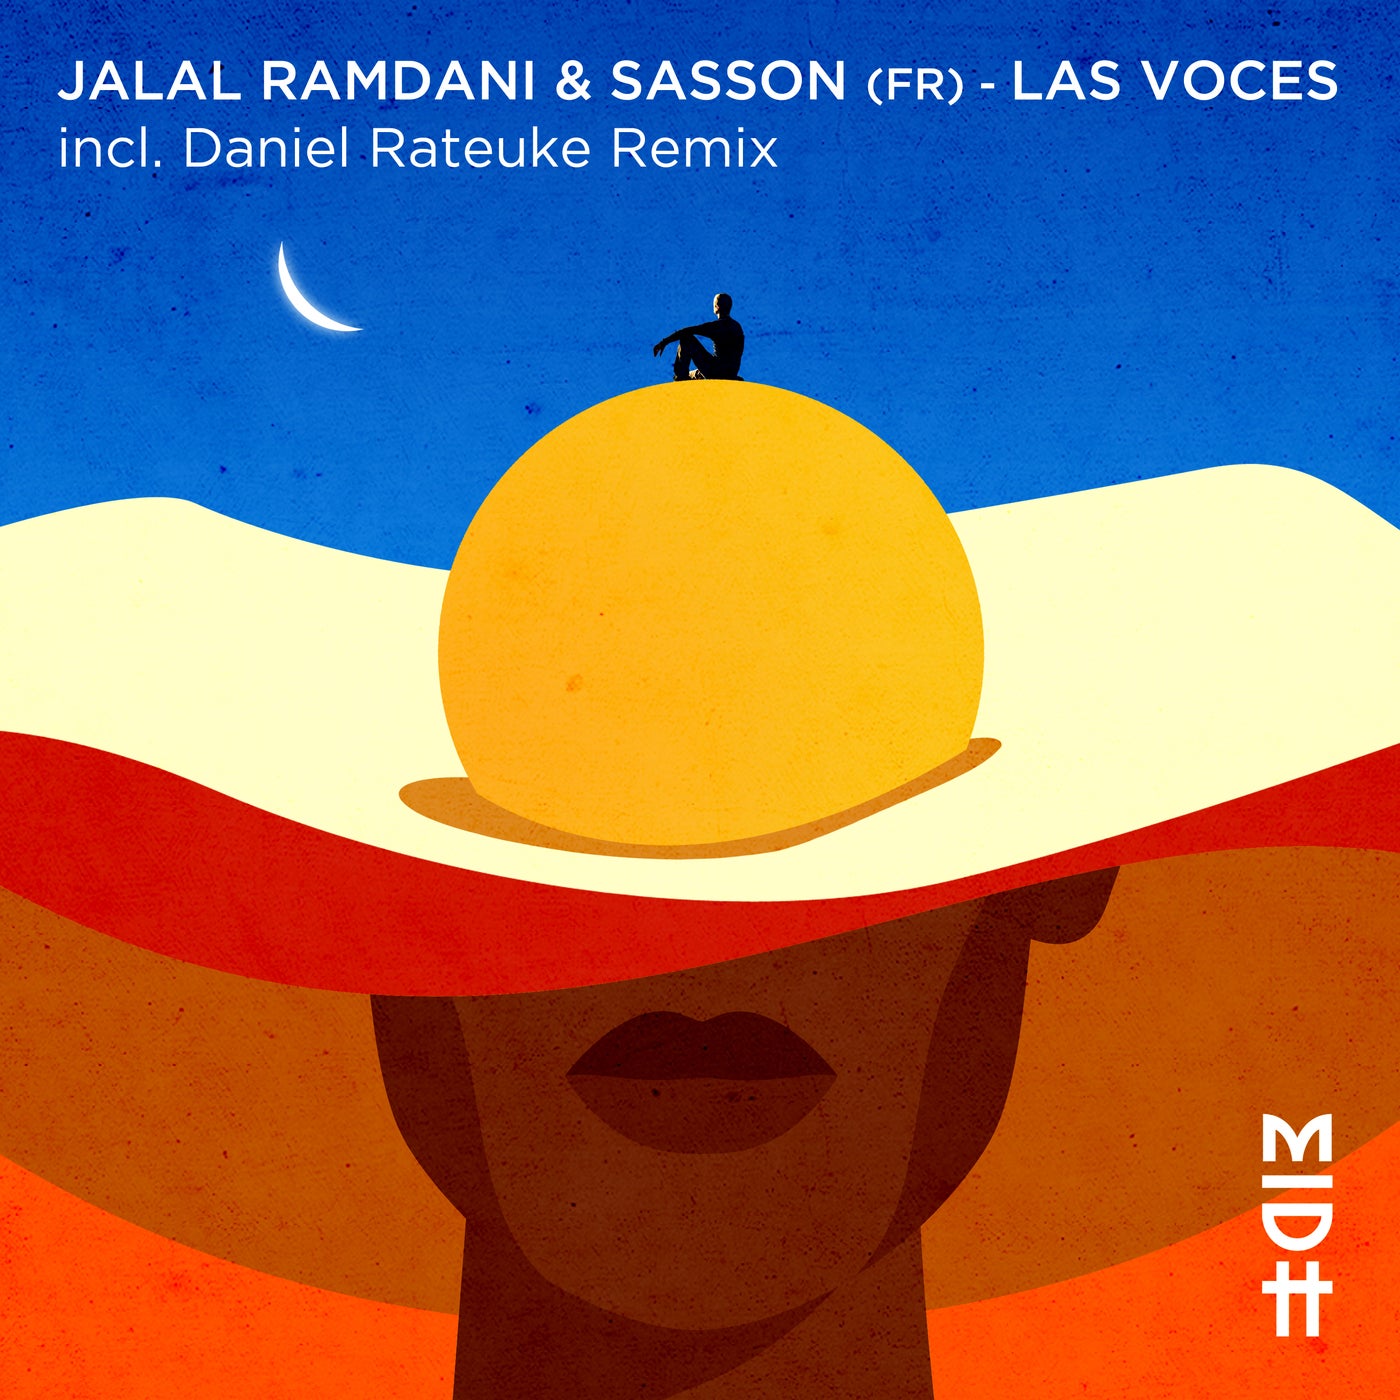 Sasson (FR) & Jalal Ramdani - Las Voces [Madorasindahouse Records]